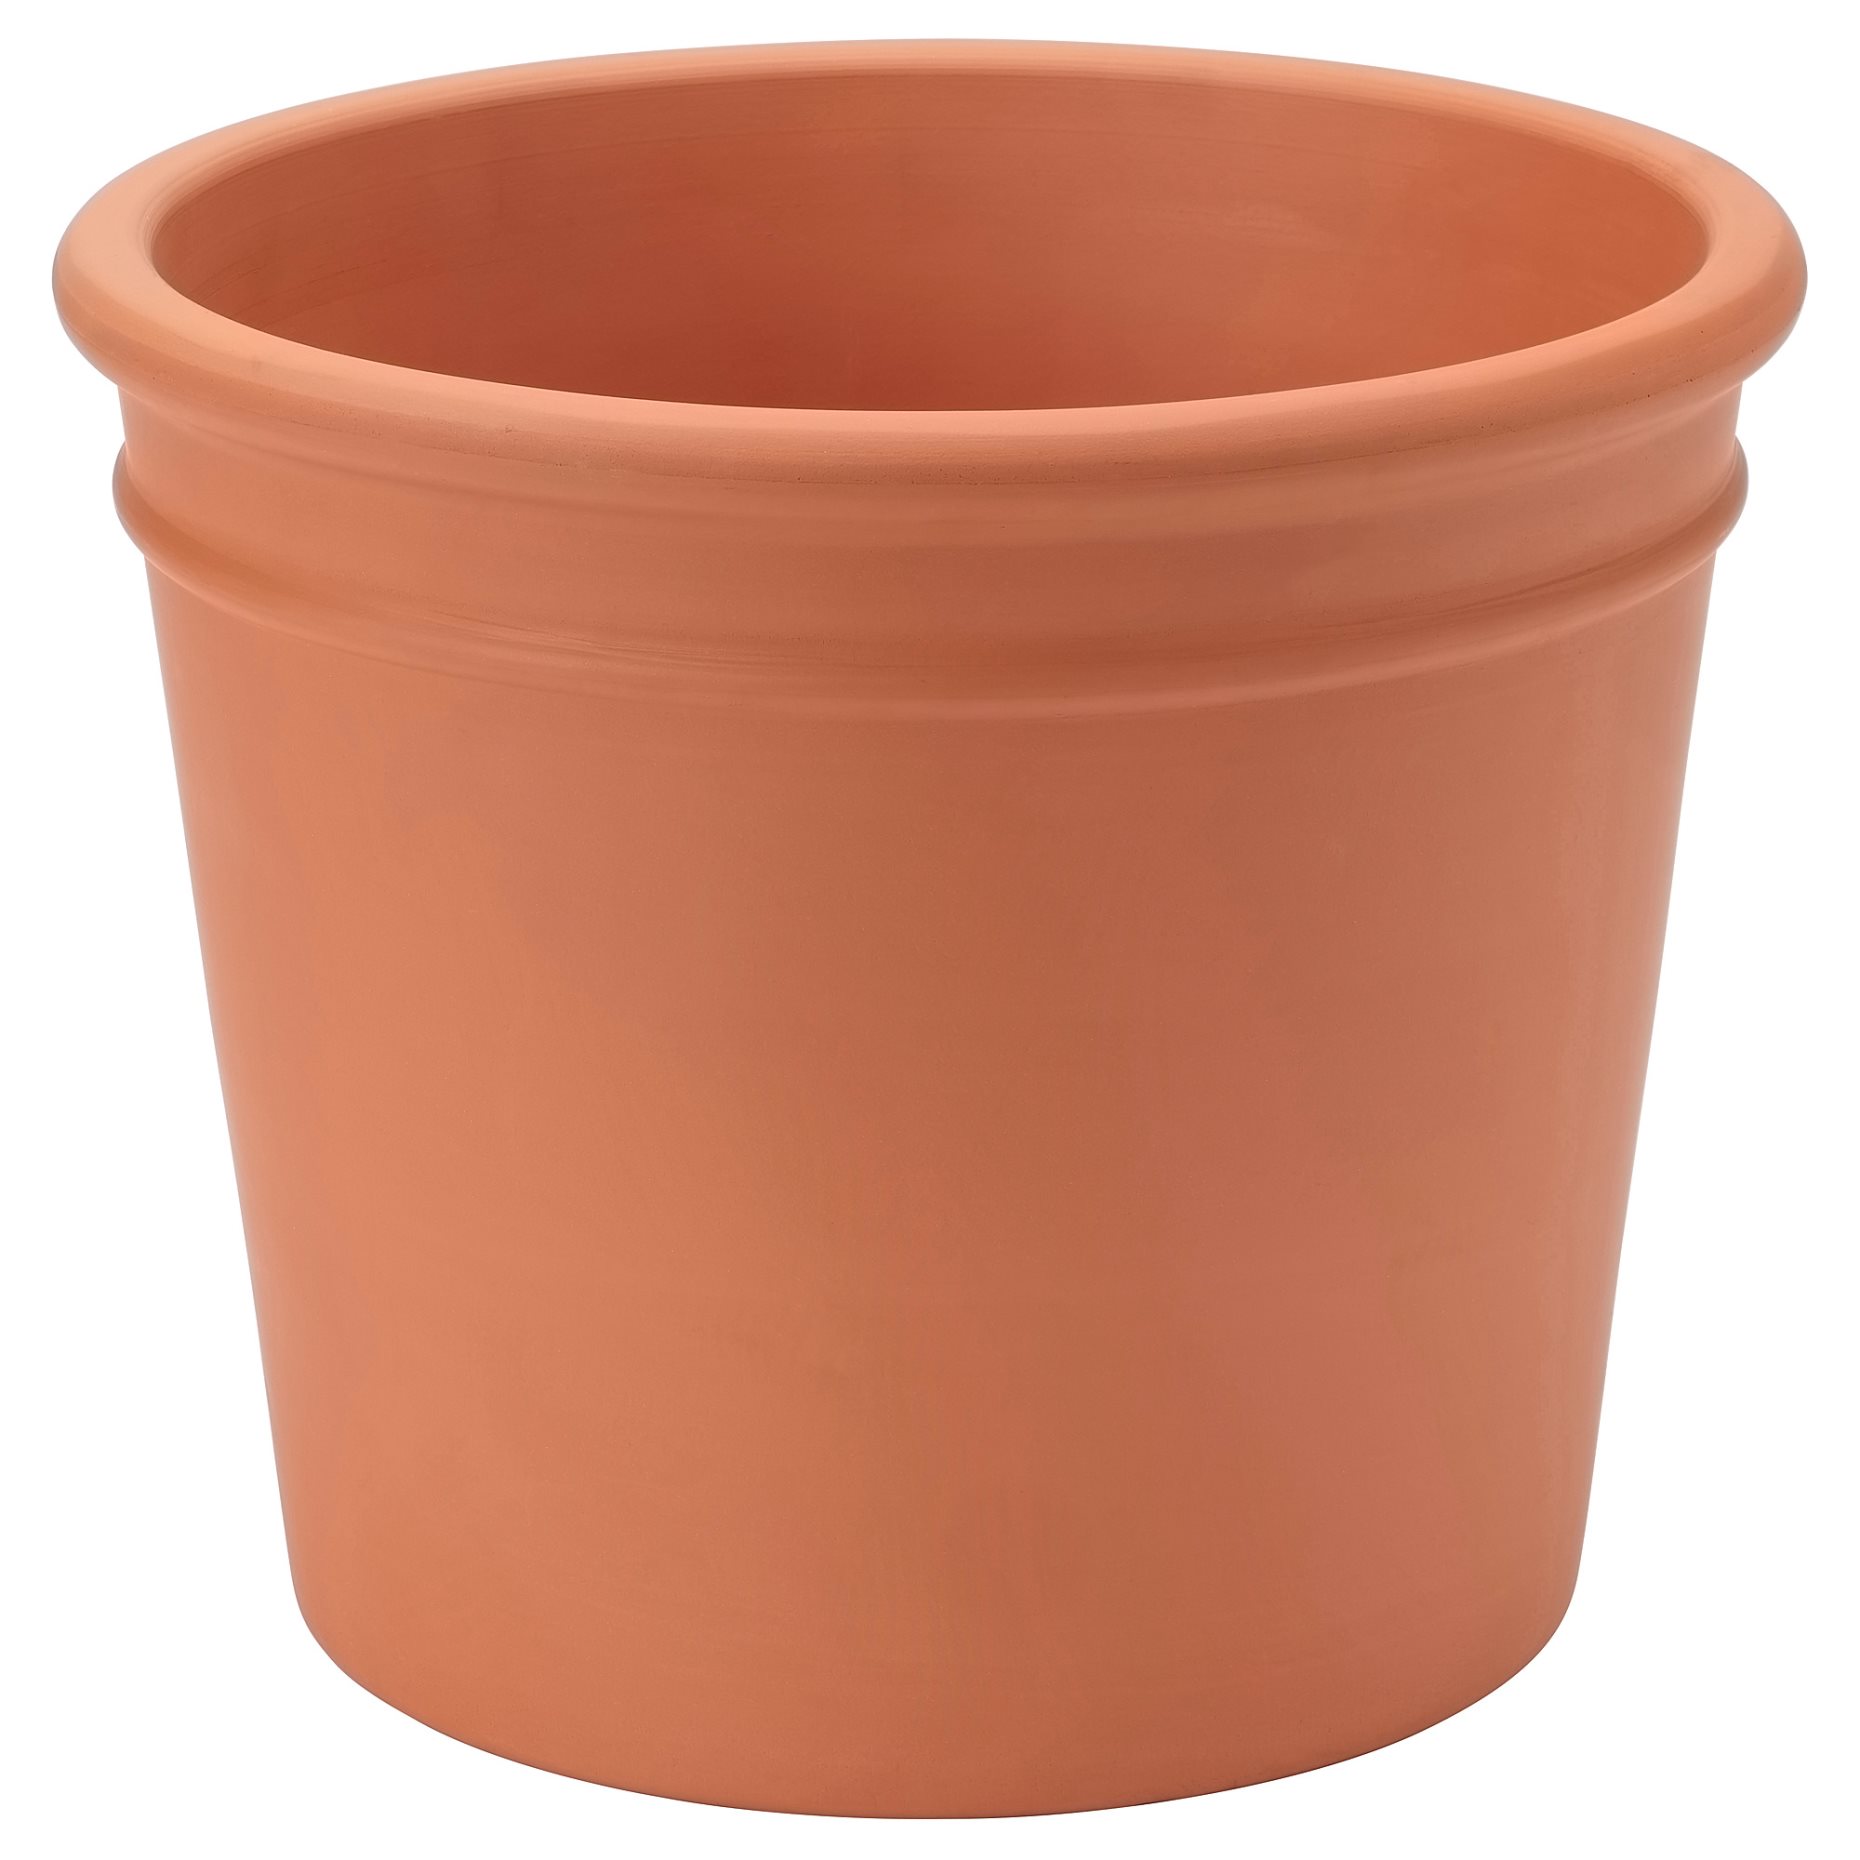 CURRYBLAD, plant pot/outdoor, 26 cm, 205.359.49